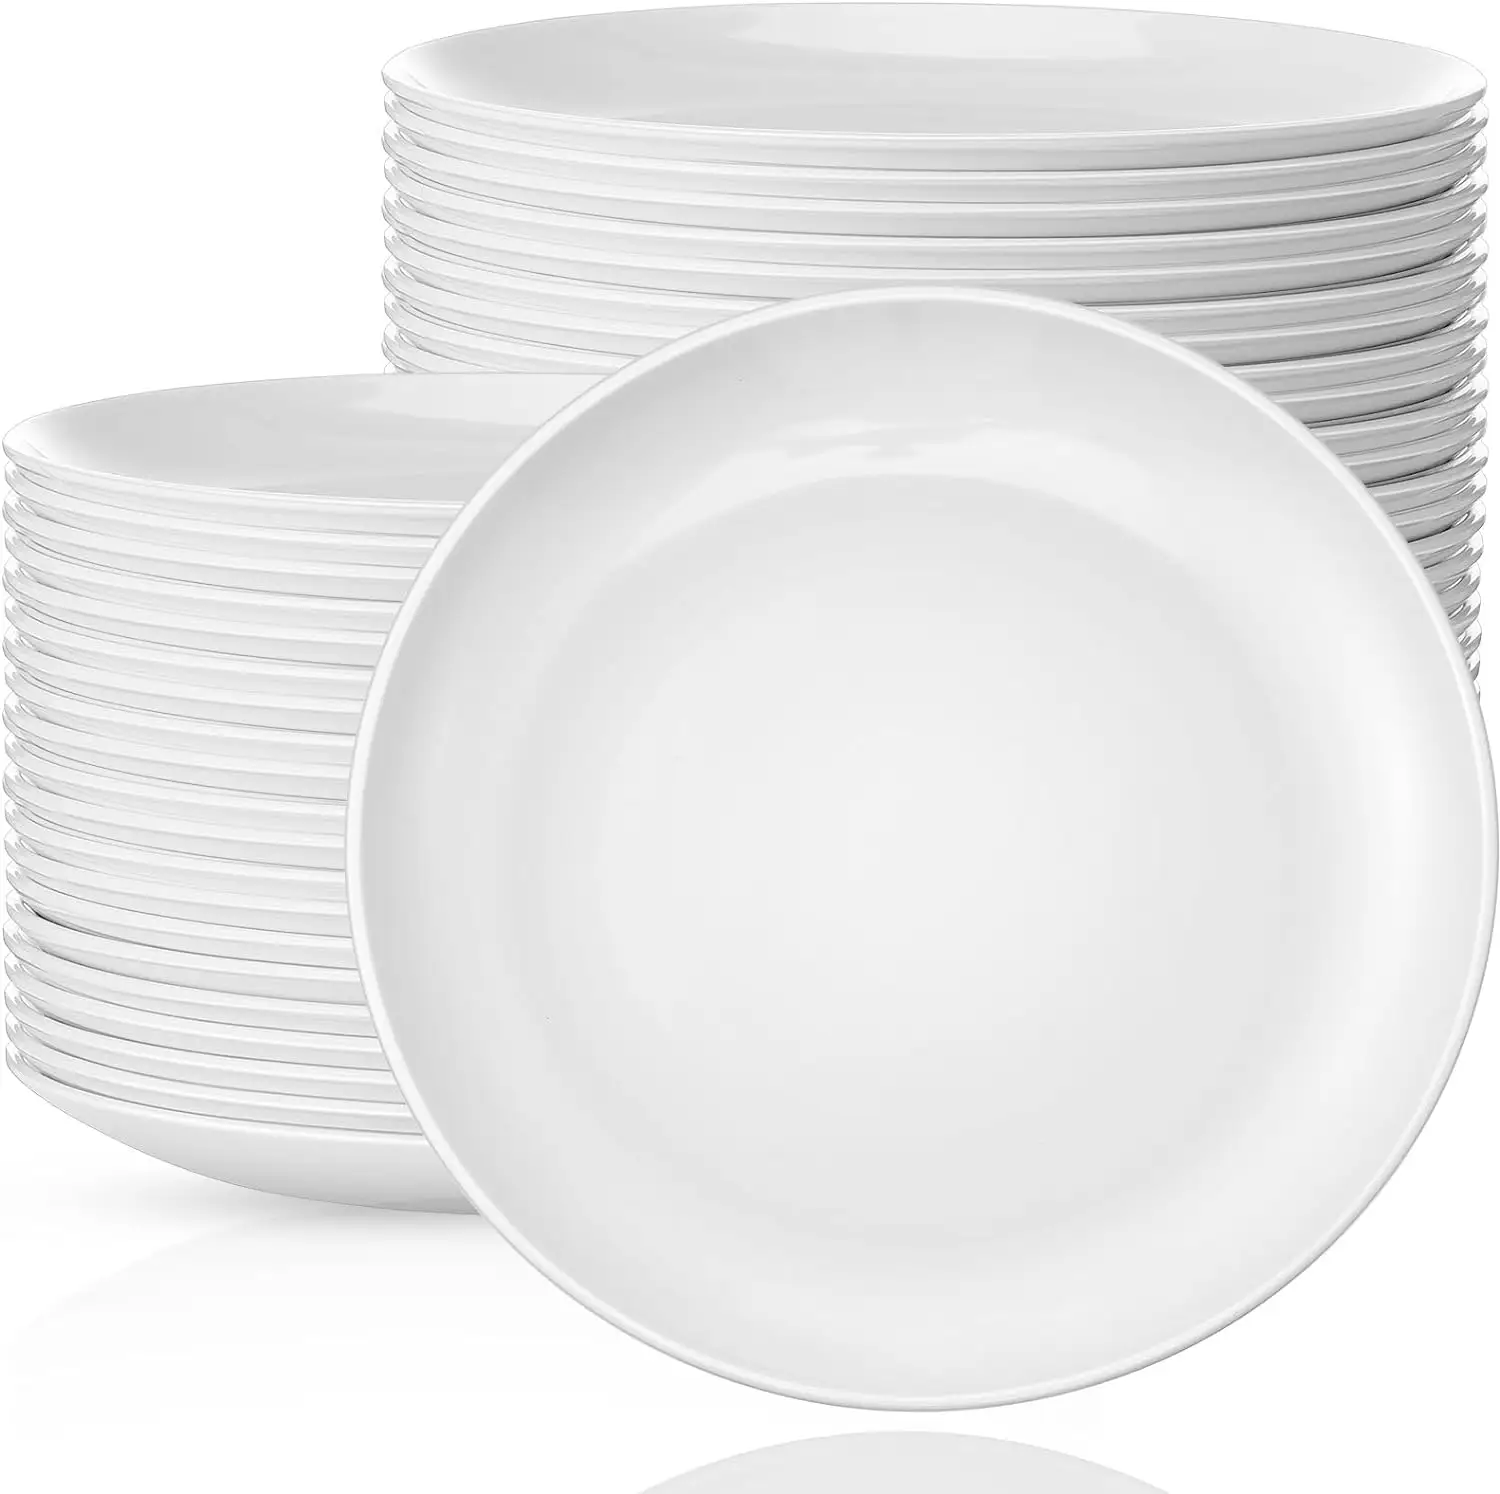 BST Kitchen custom printed round white dinnerware sets melamine plates dishes for restaurant